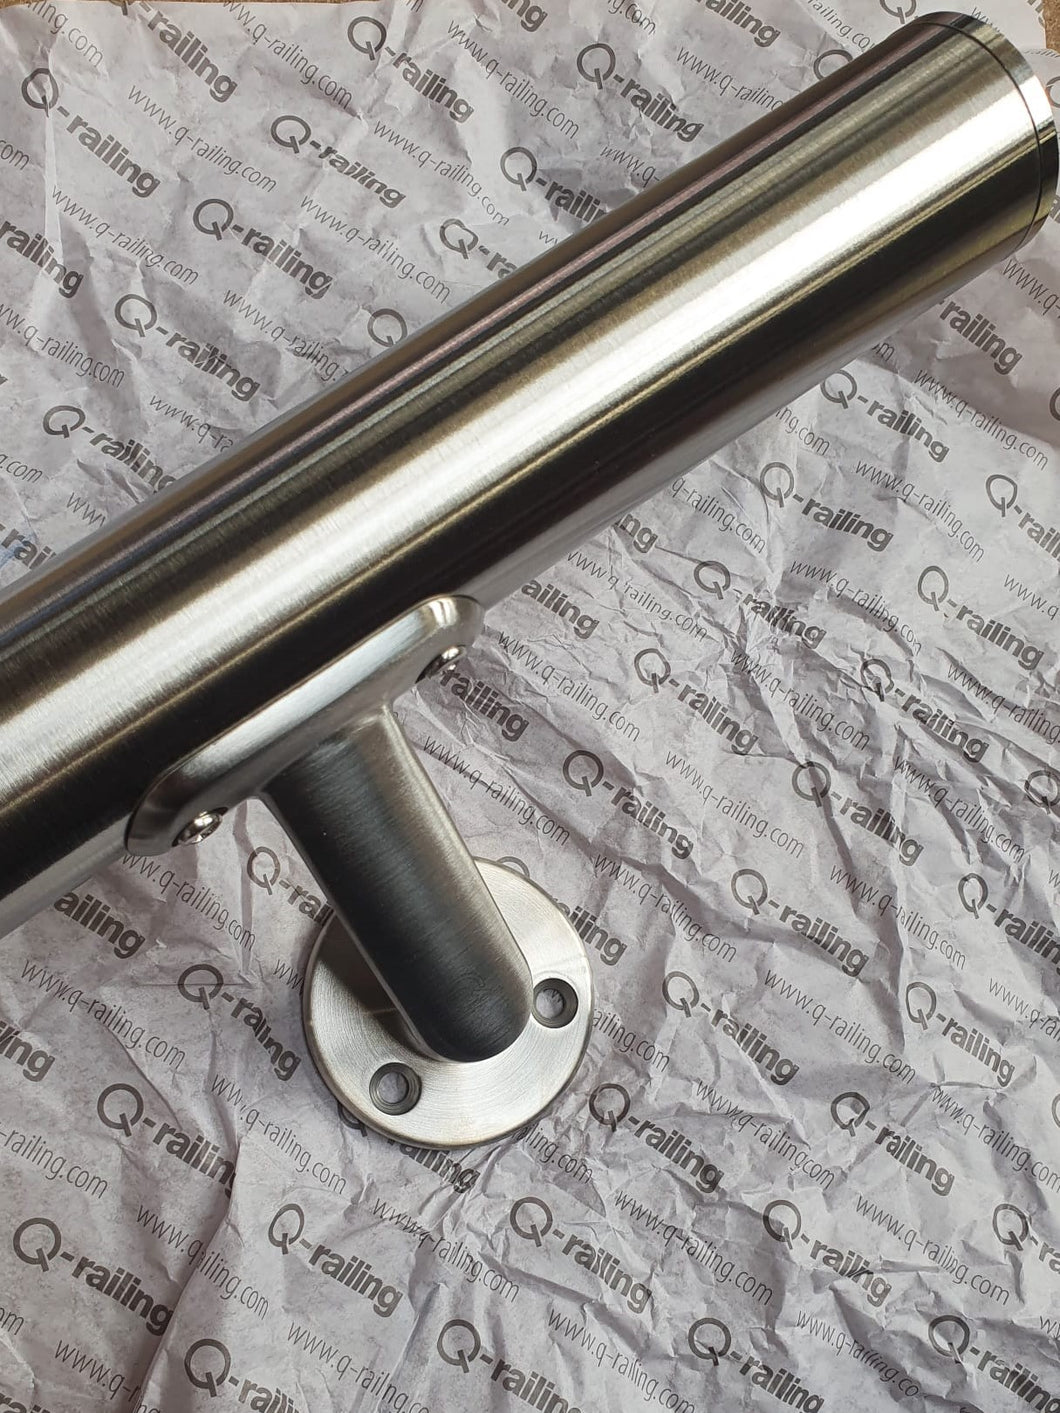 Stainless Steel Handrail With Flat Ends- Upgraded Bracket- Sleek Rail